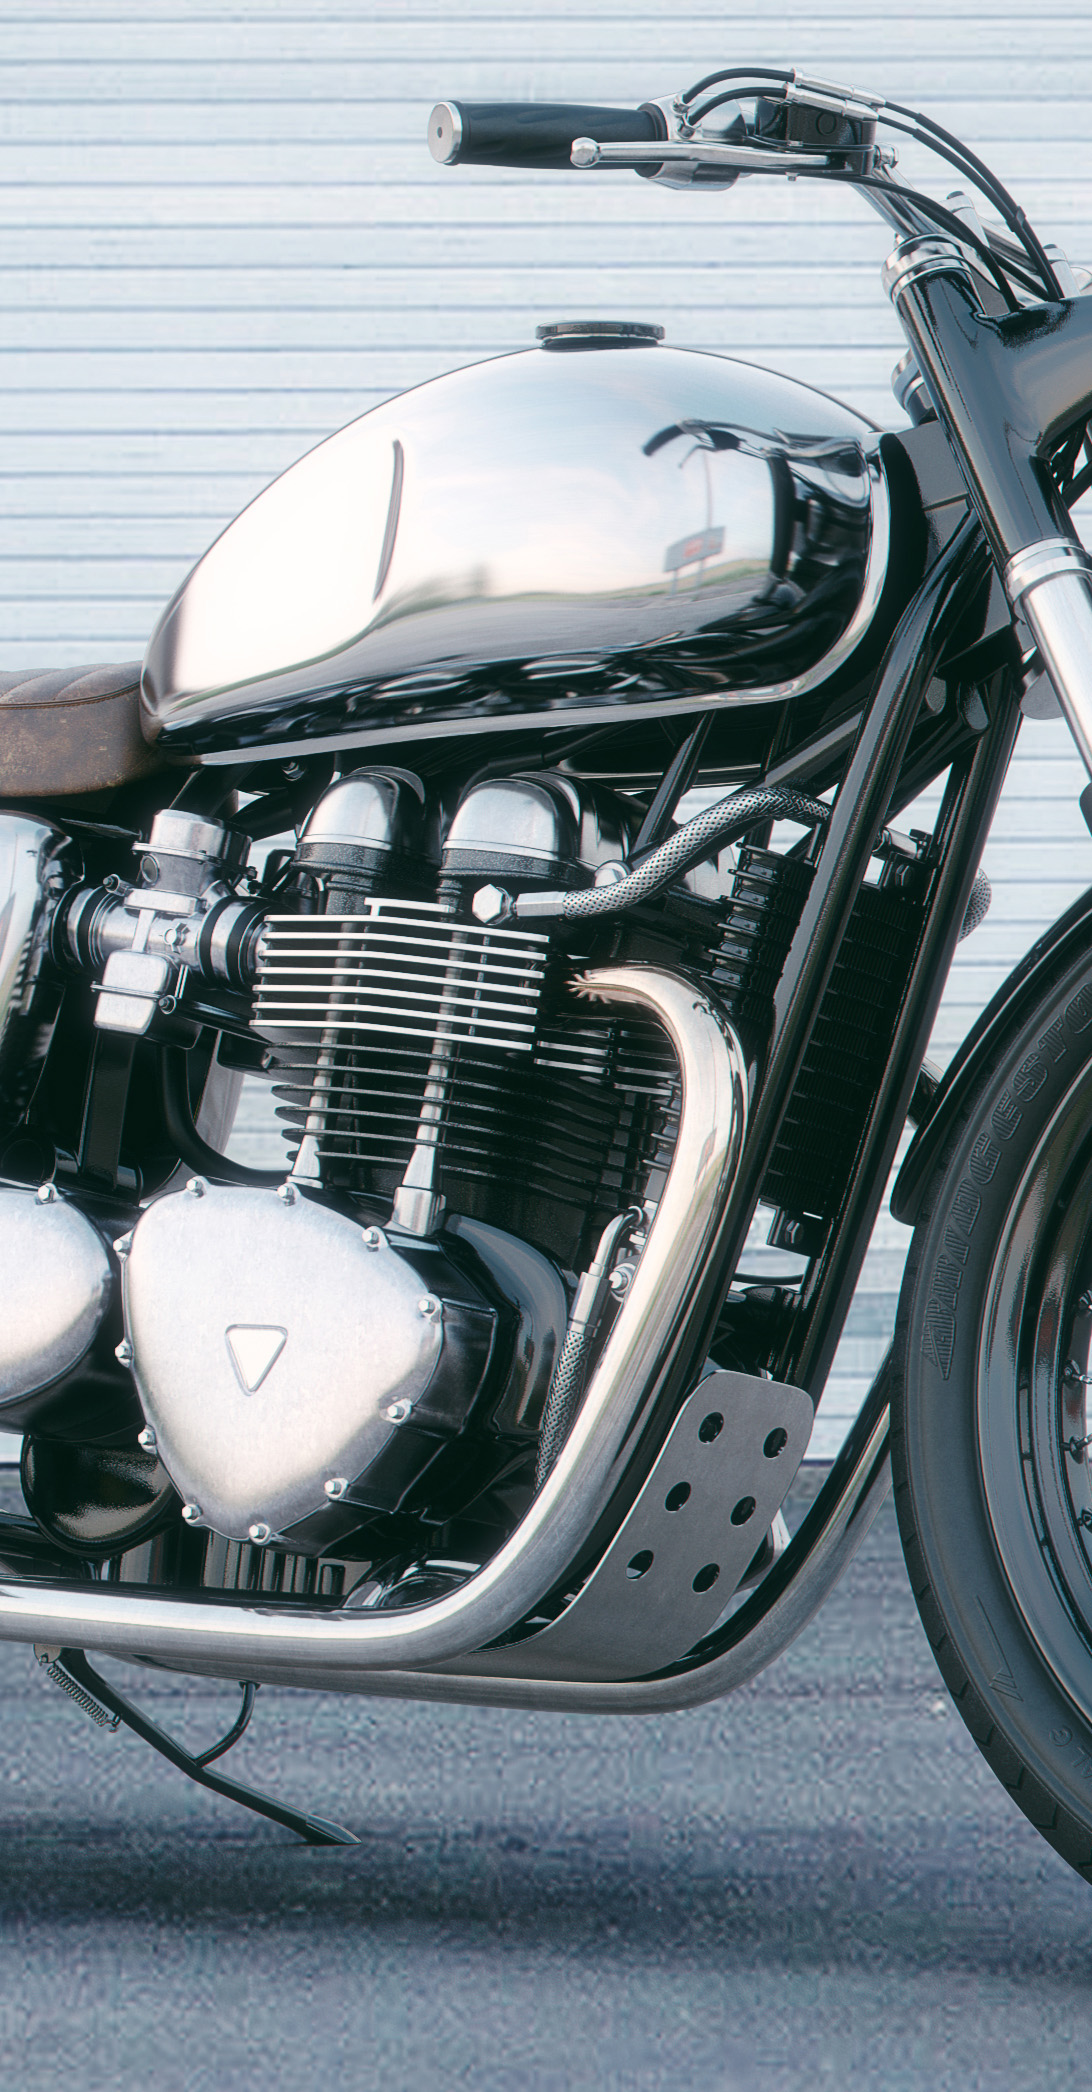 moto motocycle Bike triumph bonneville Retro CGI rendering 3D modo